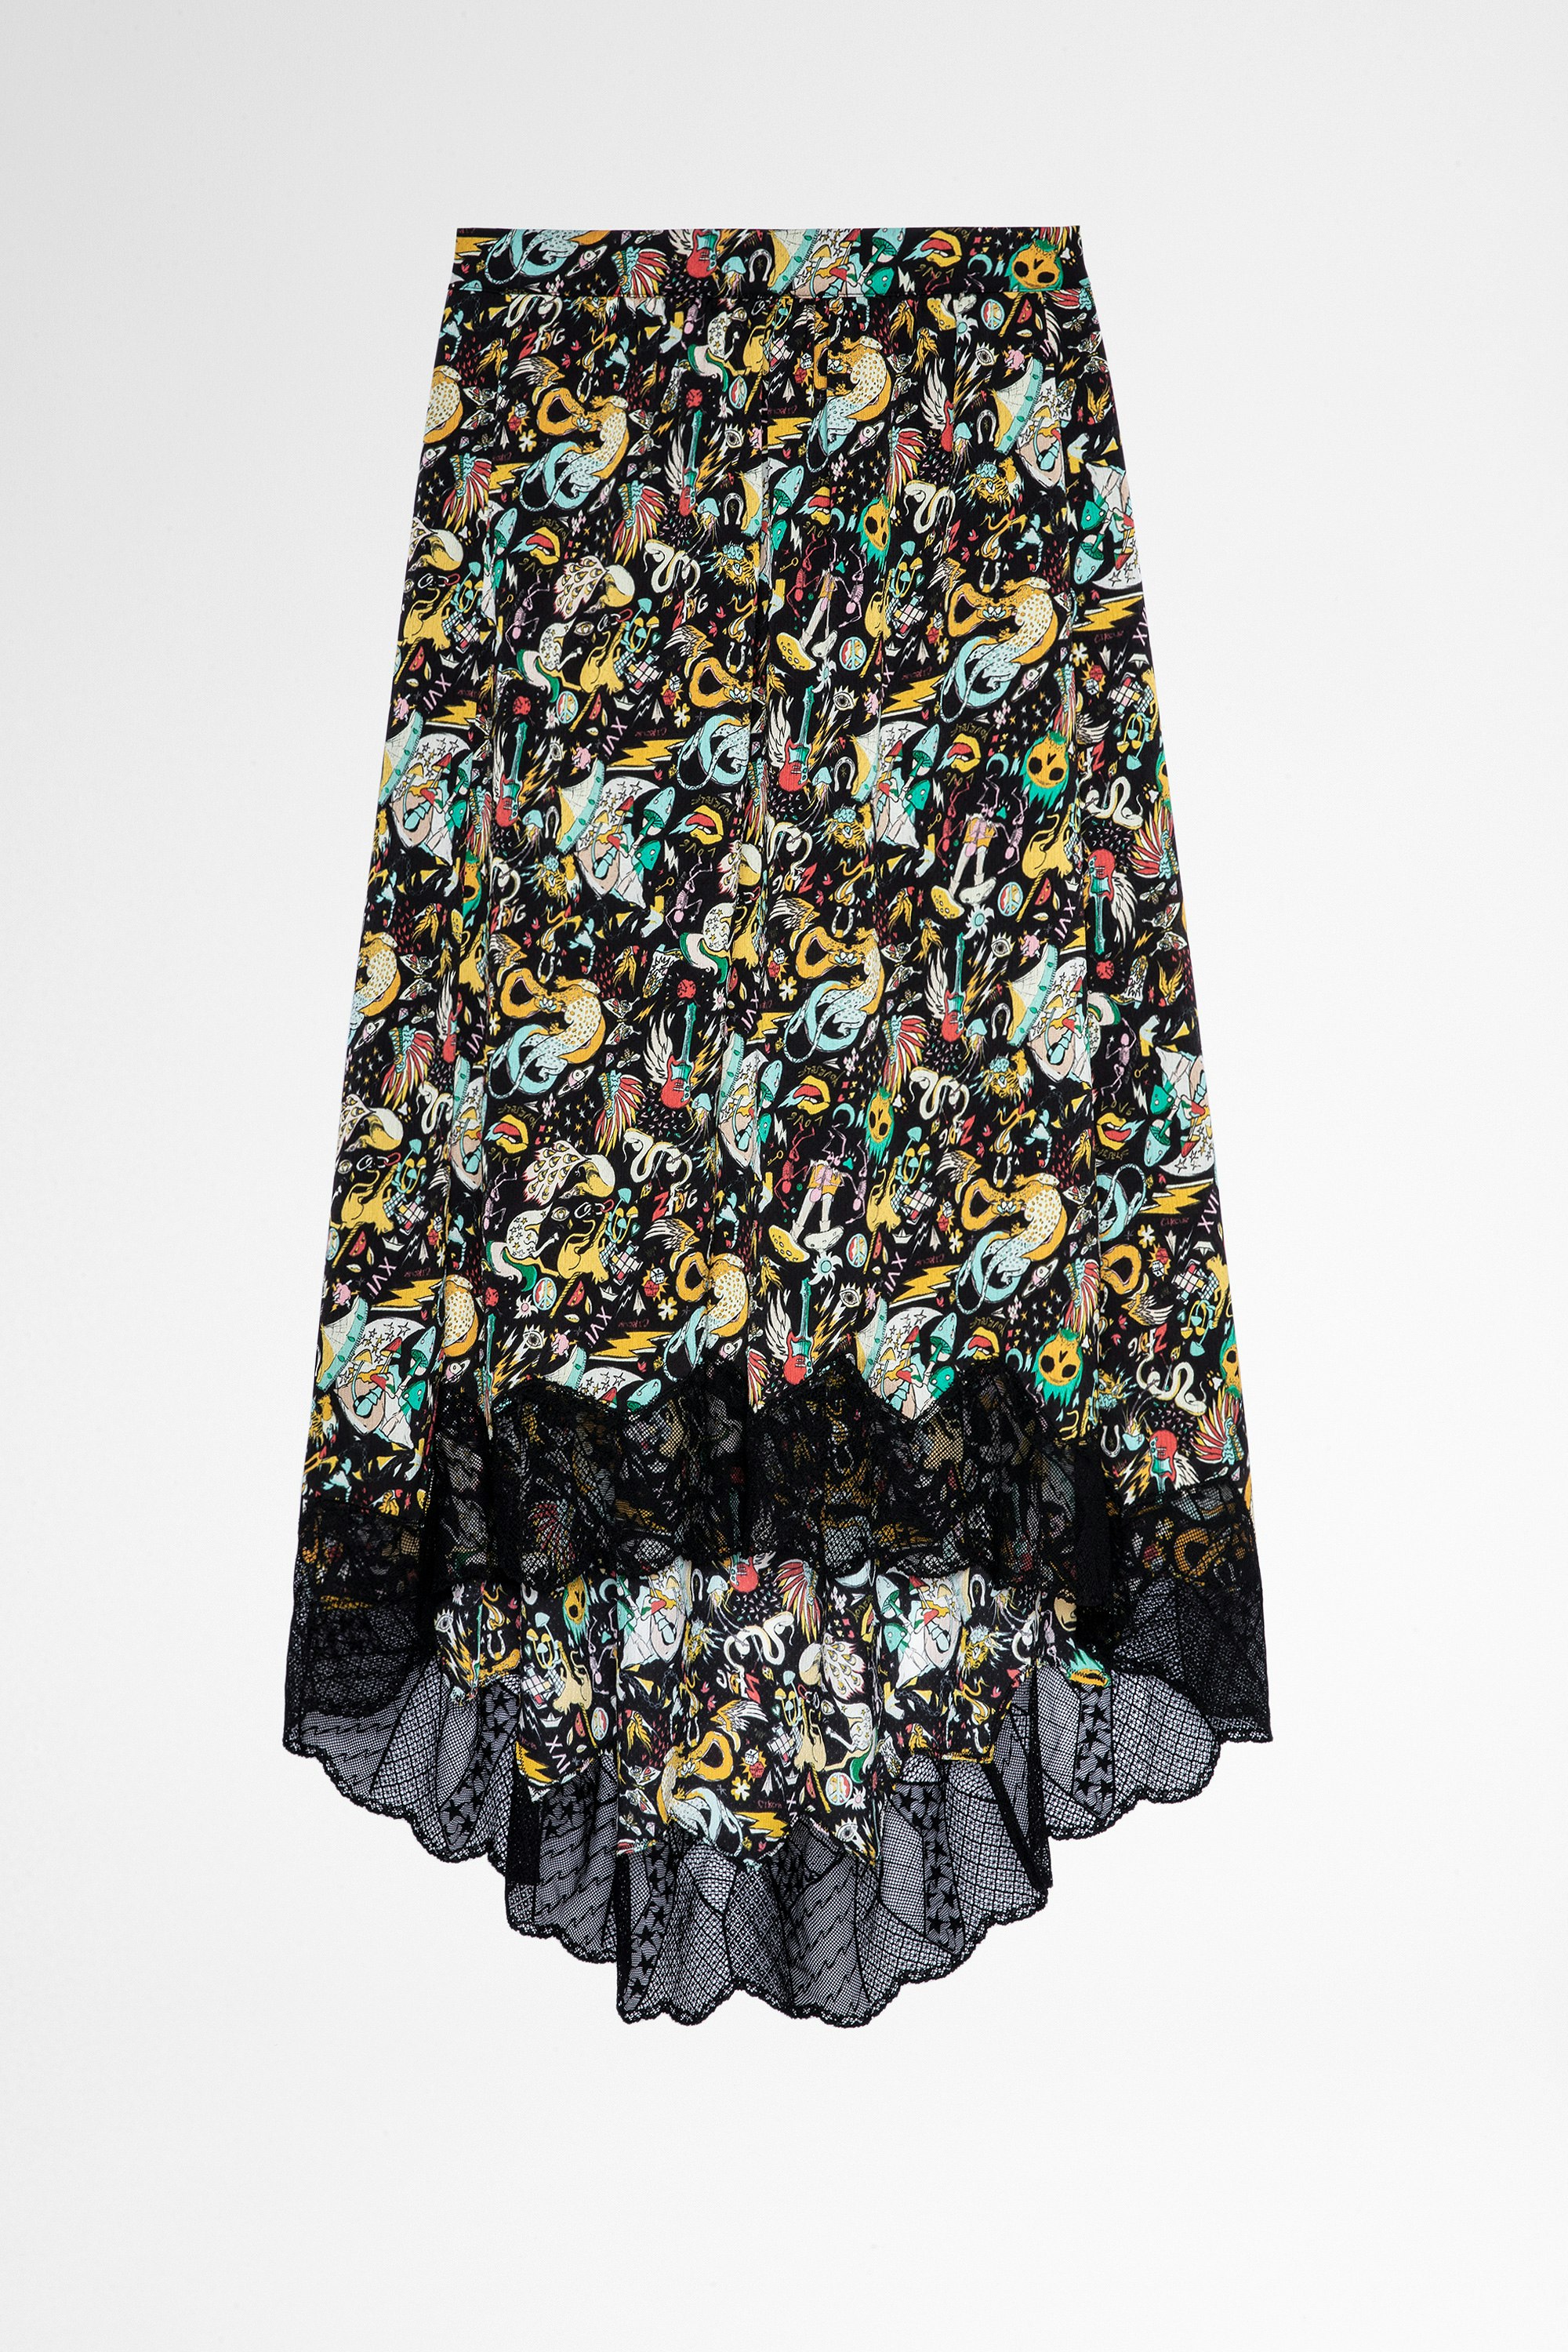 Joslin Skirt Women's mid-length asymmetrical circus print skirt. Made with recycled fibers